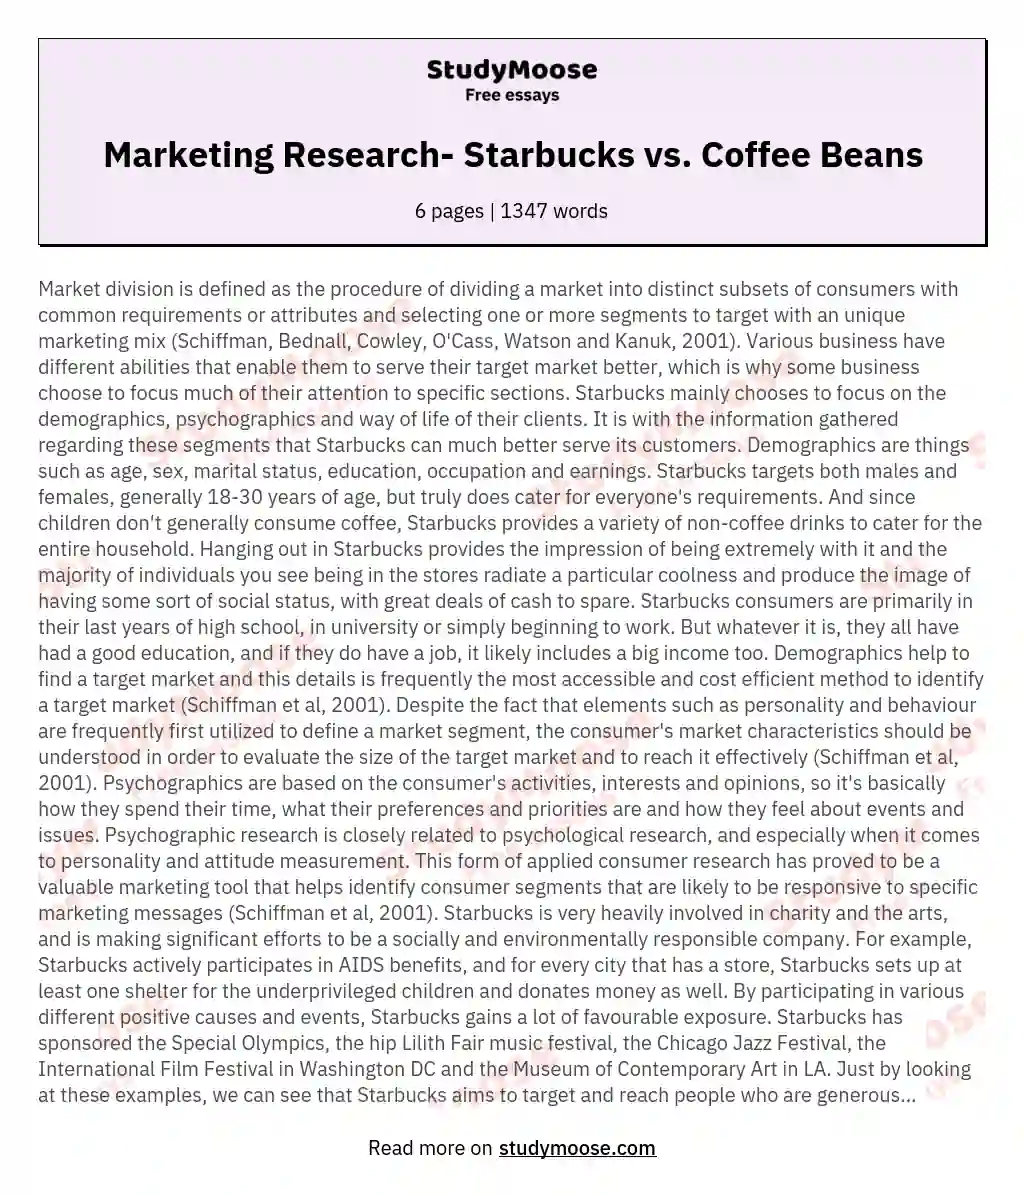 Marketing Research- Starbucks vs. Coffee Beans